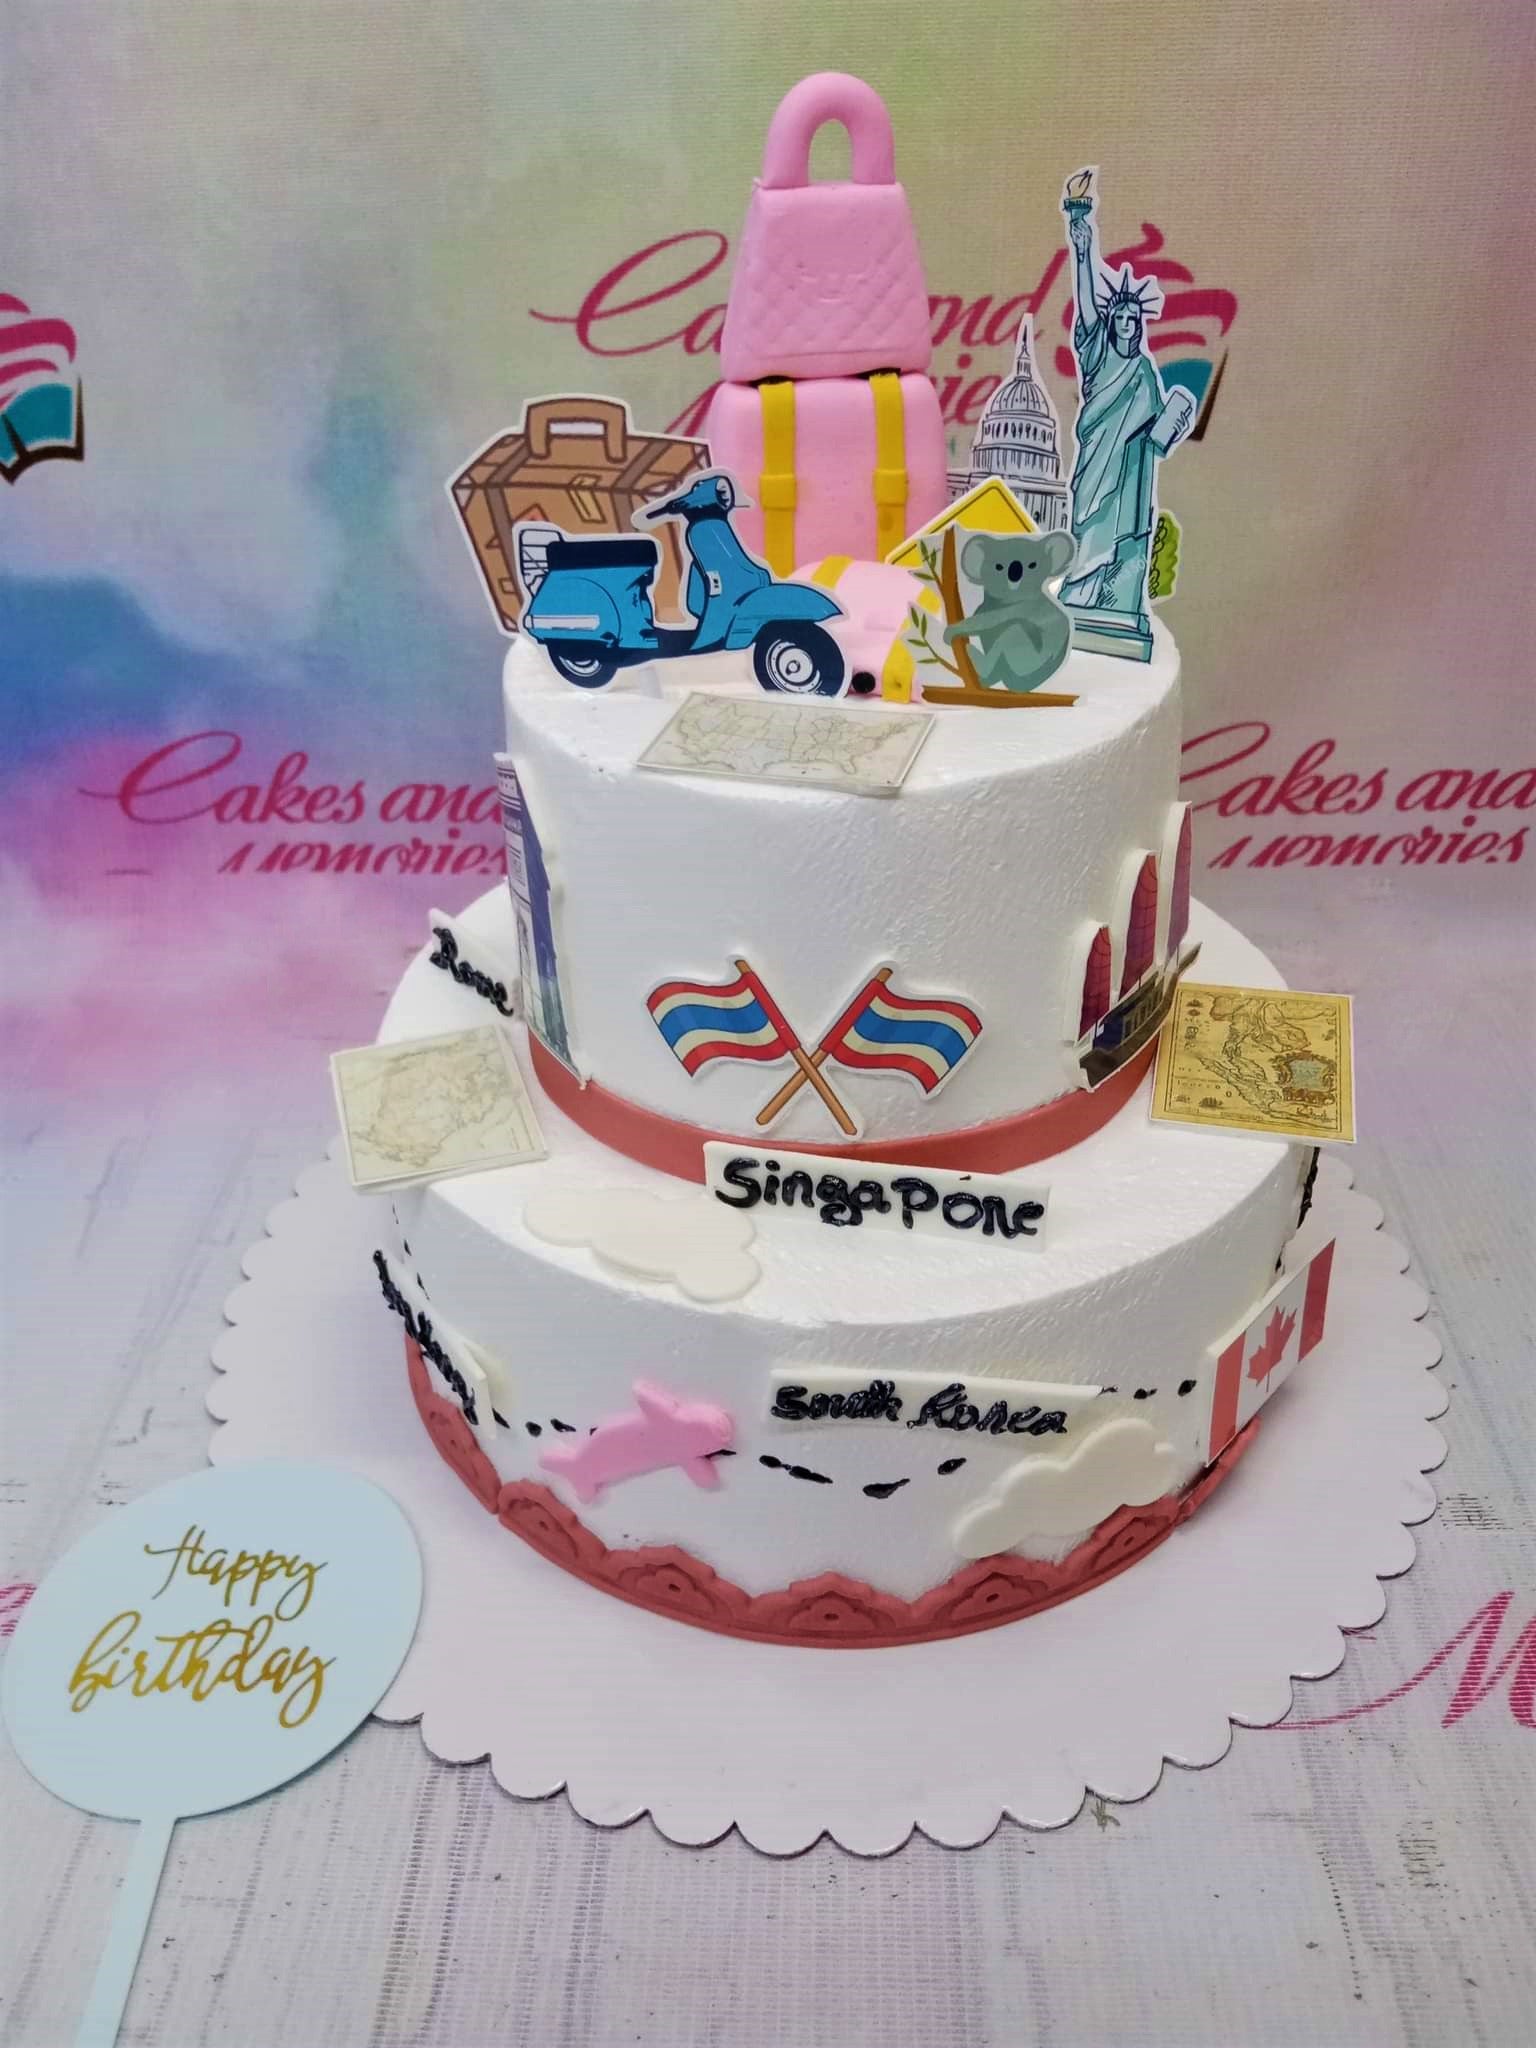 Travel Around the World Cake - Bake a Wish by Walter